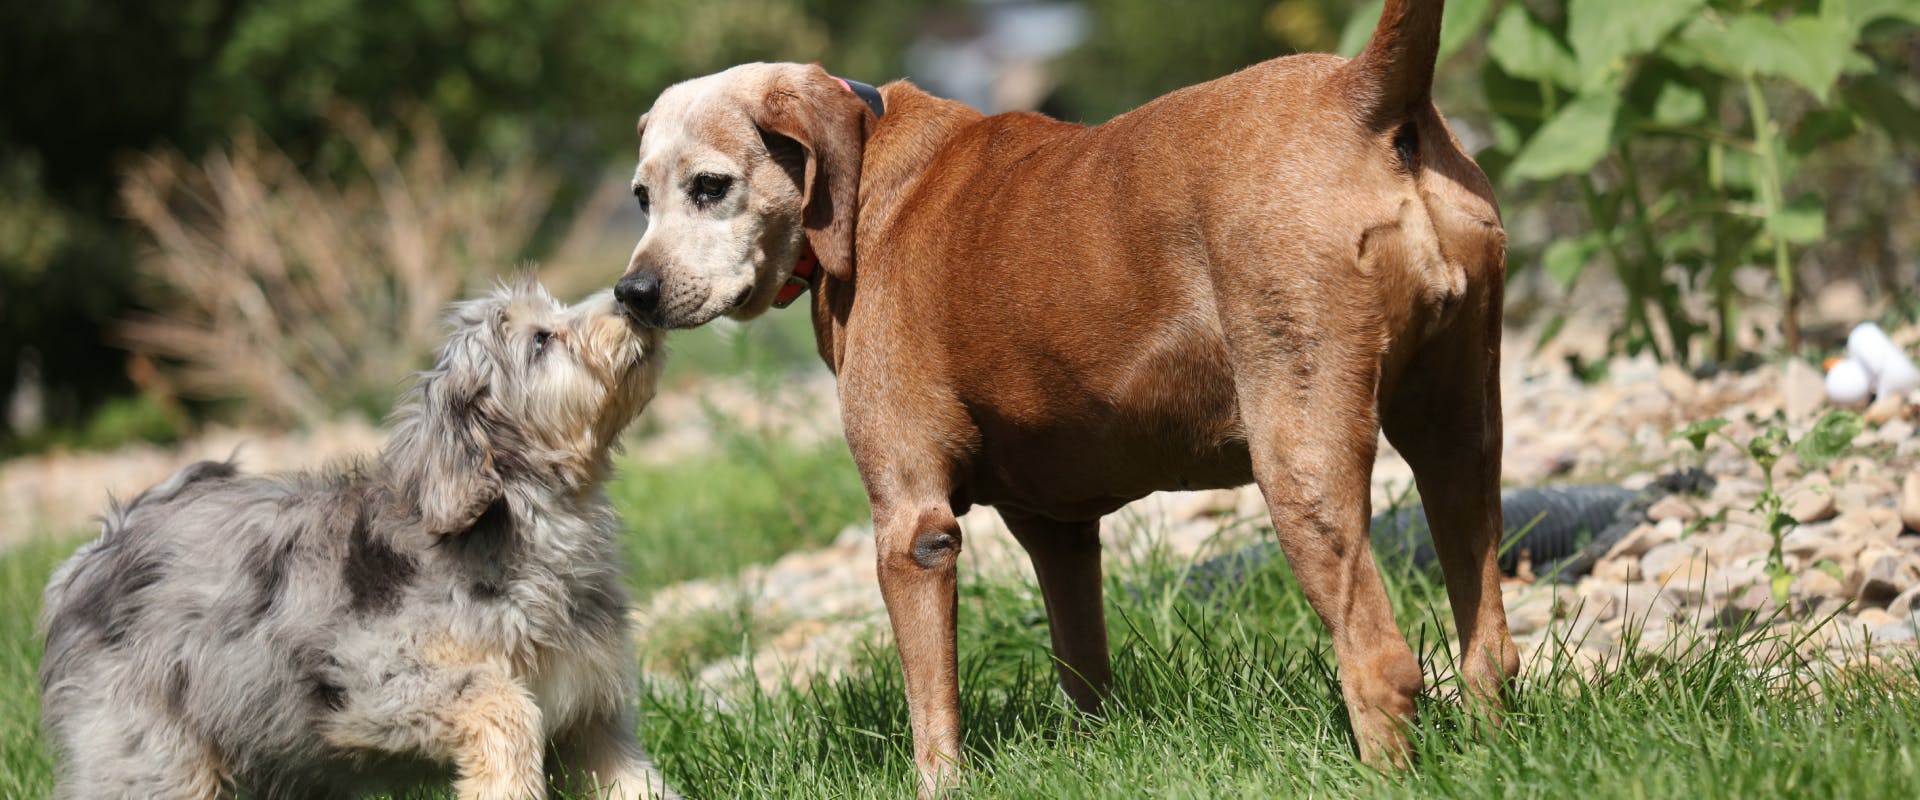 A young puppy sniffs an older dog.